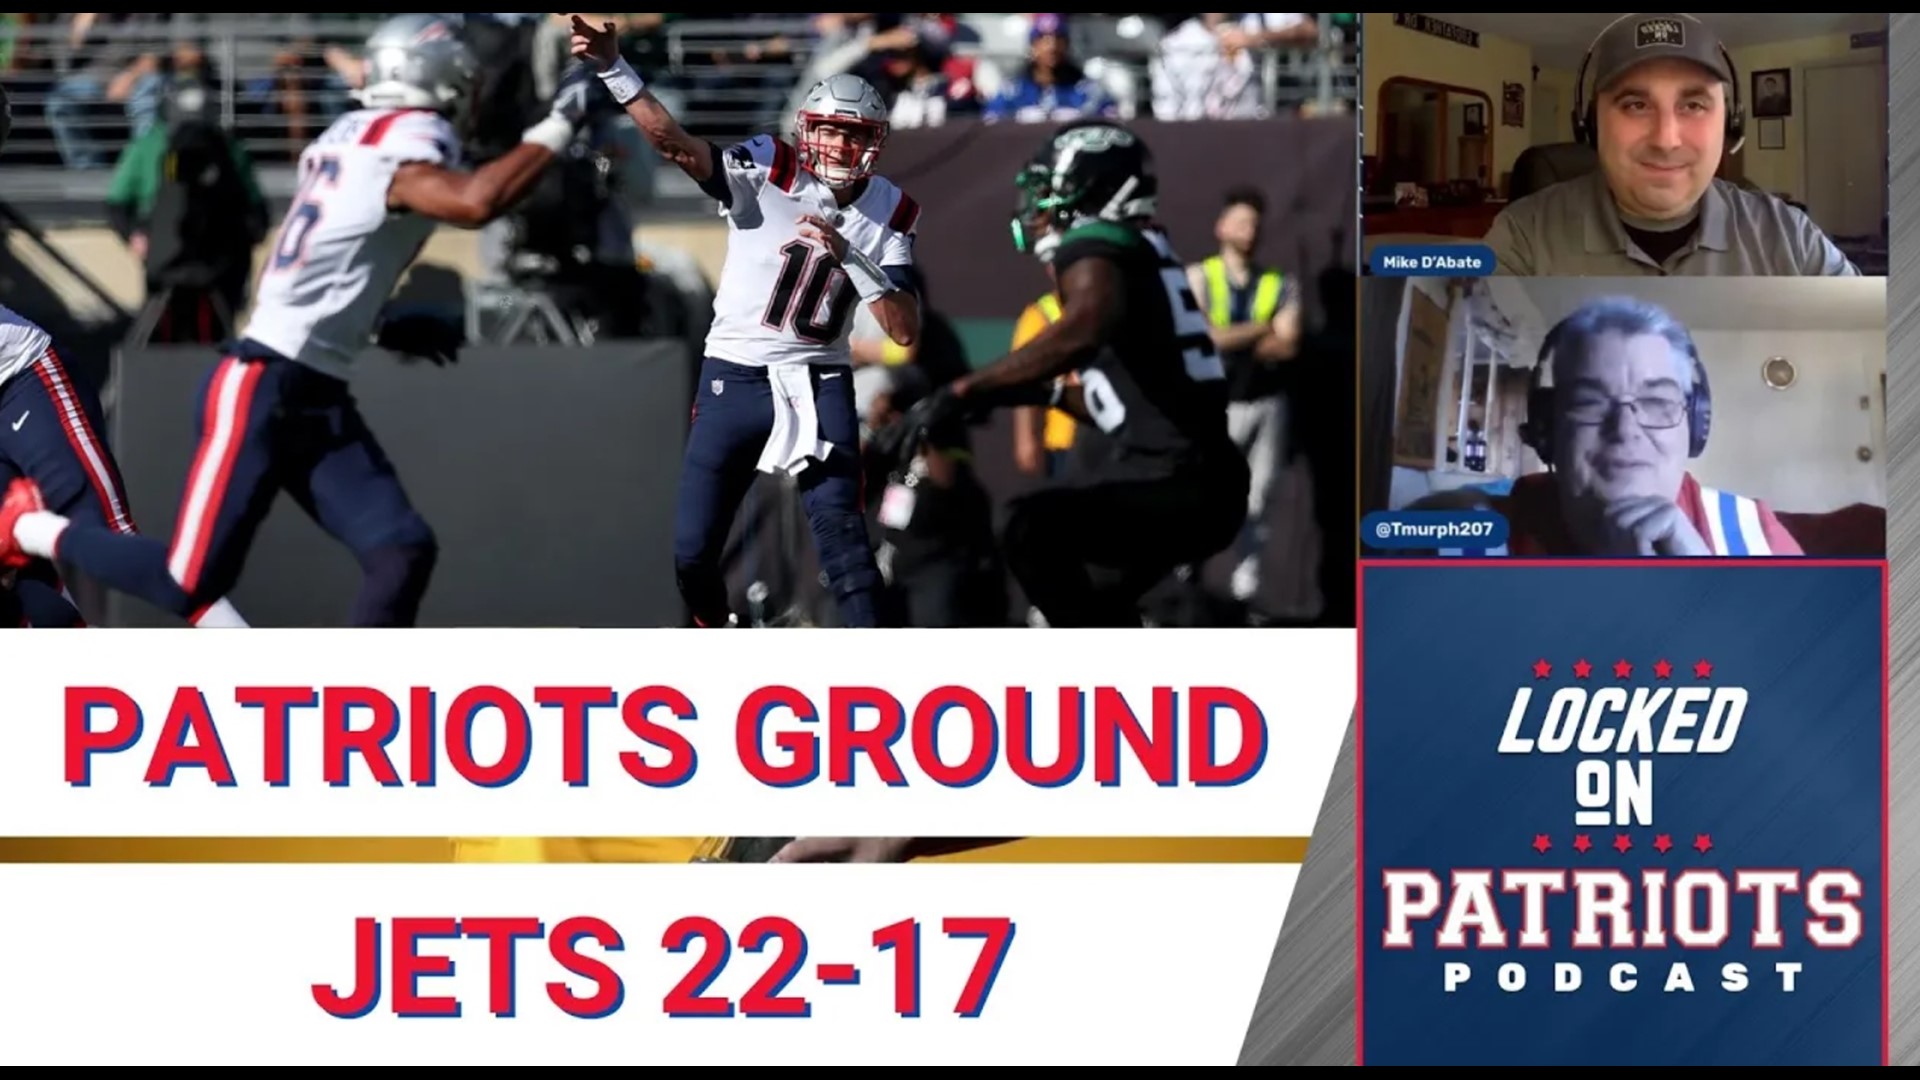 Flight canceled: New England Patriots ground New York Jets, 22-17